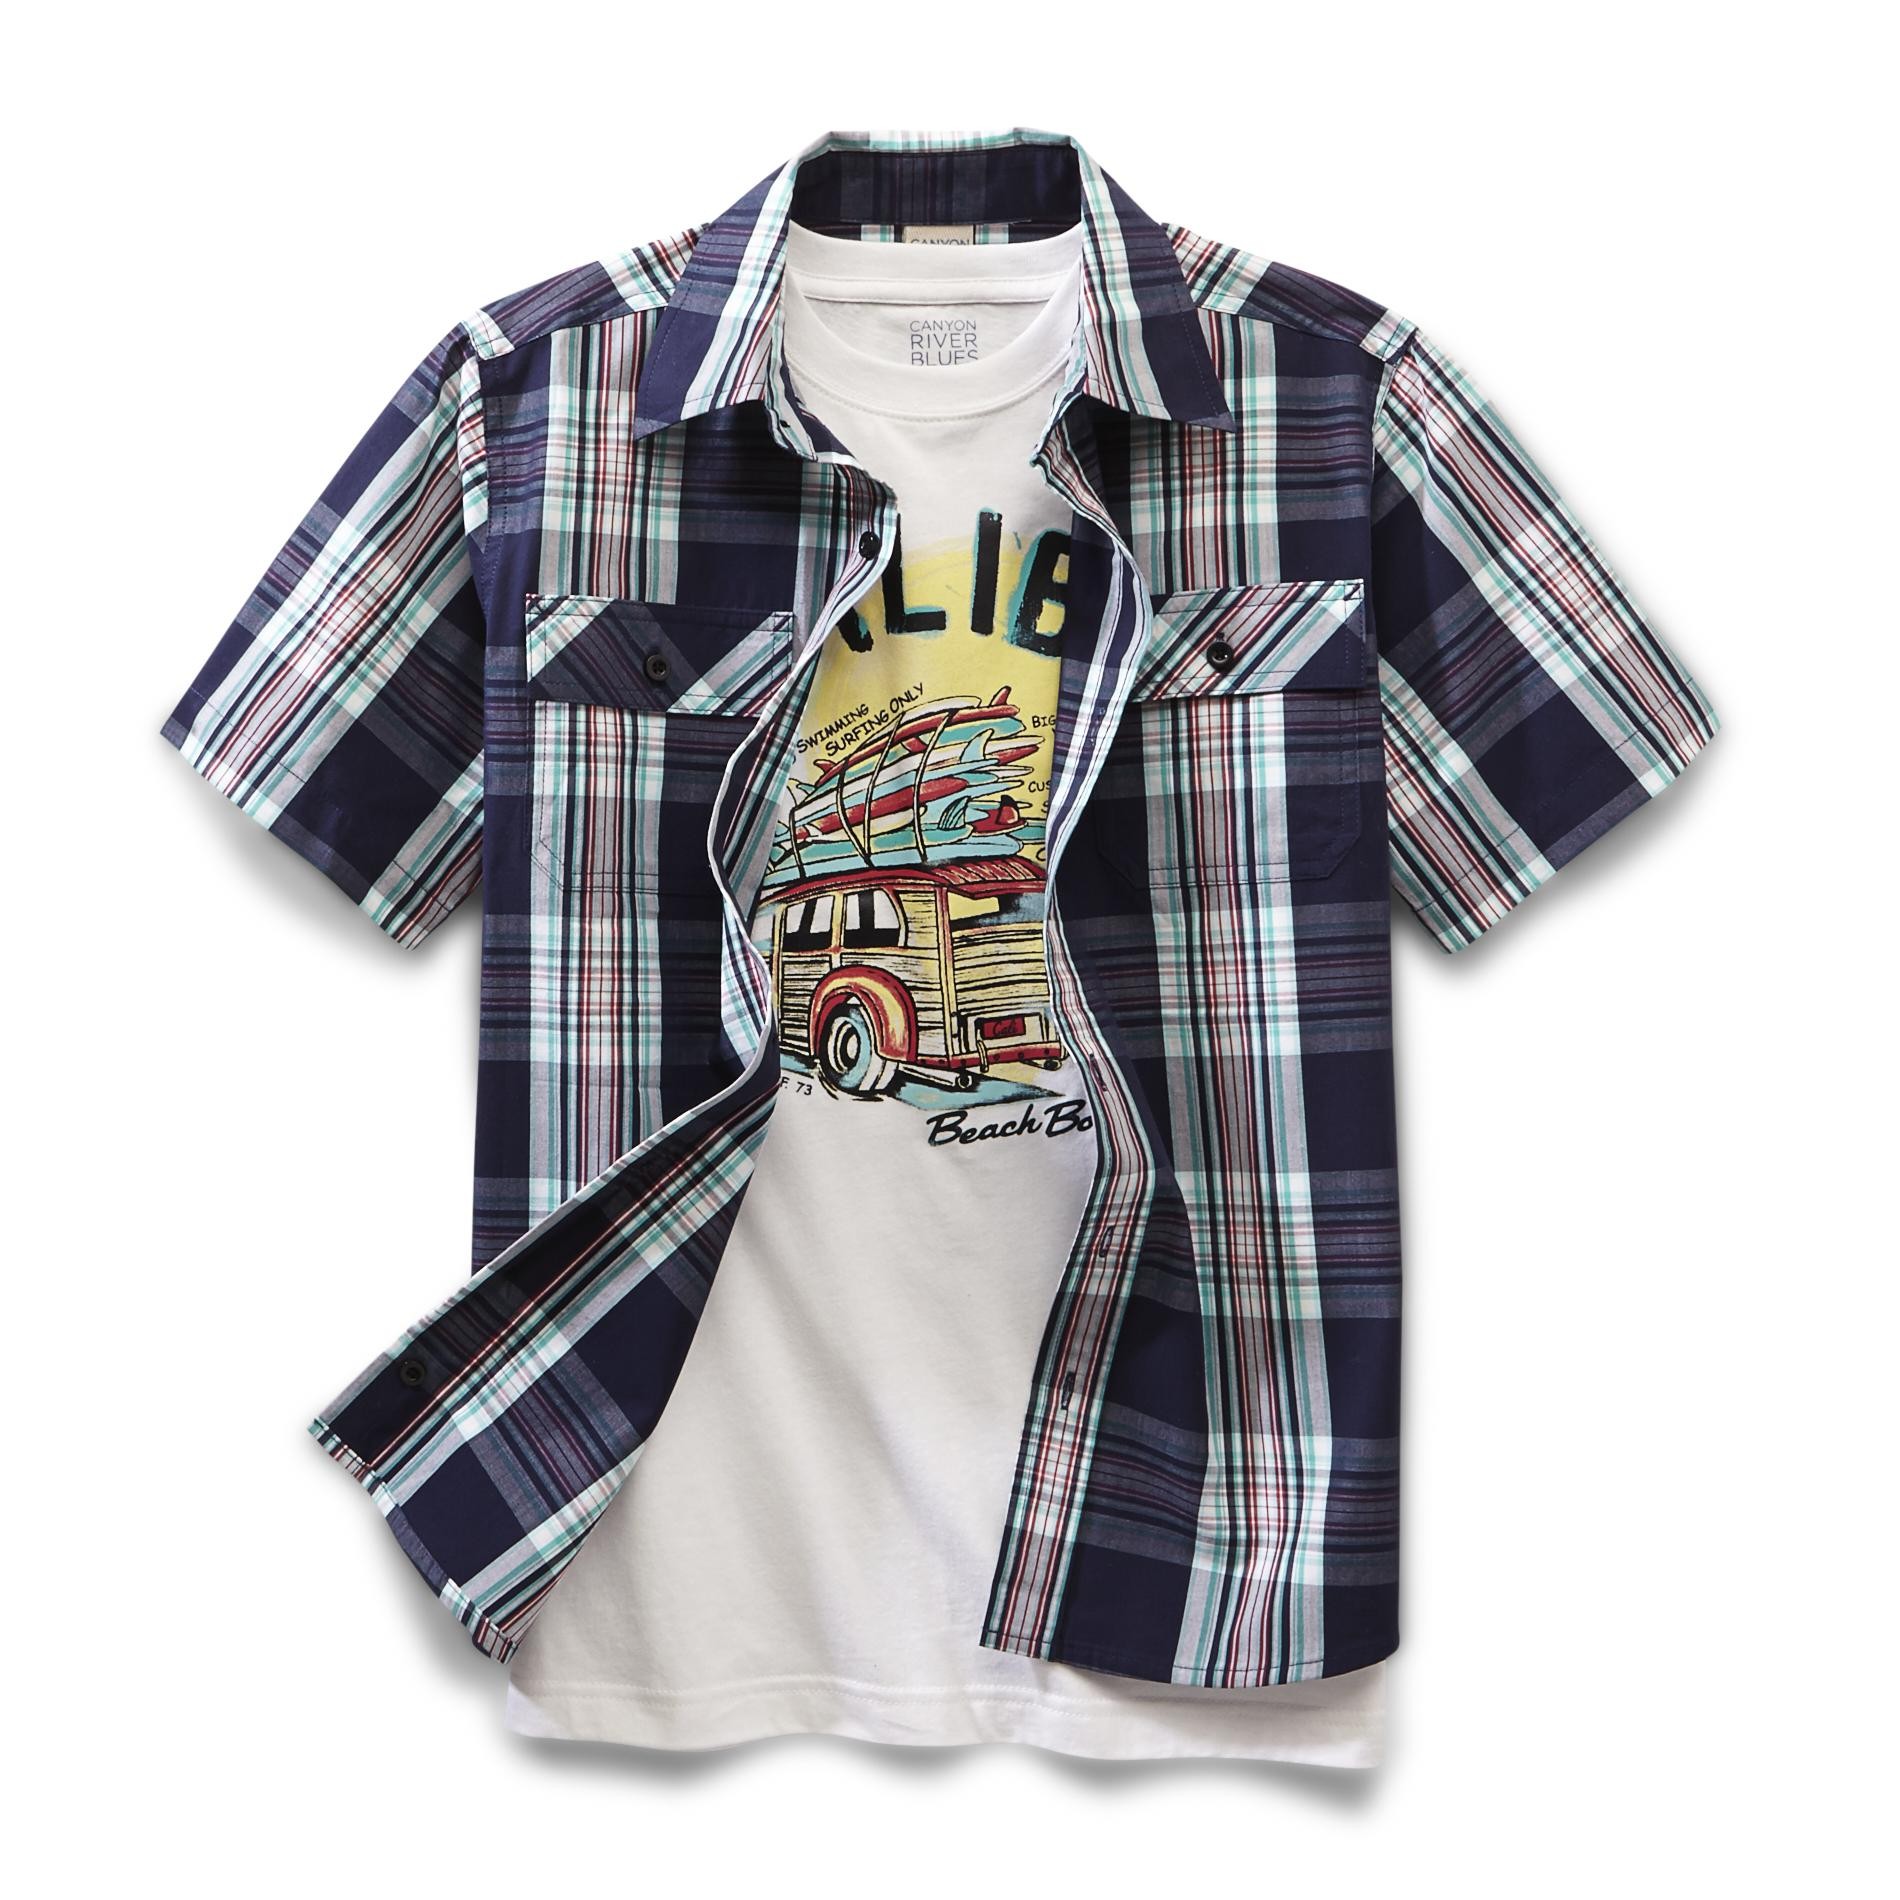 Canyon River Blues Boy's Woven Shirt & T-Shirt - Turntable Battle